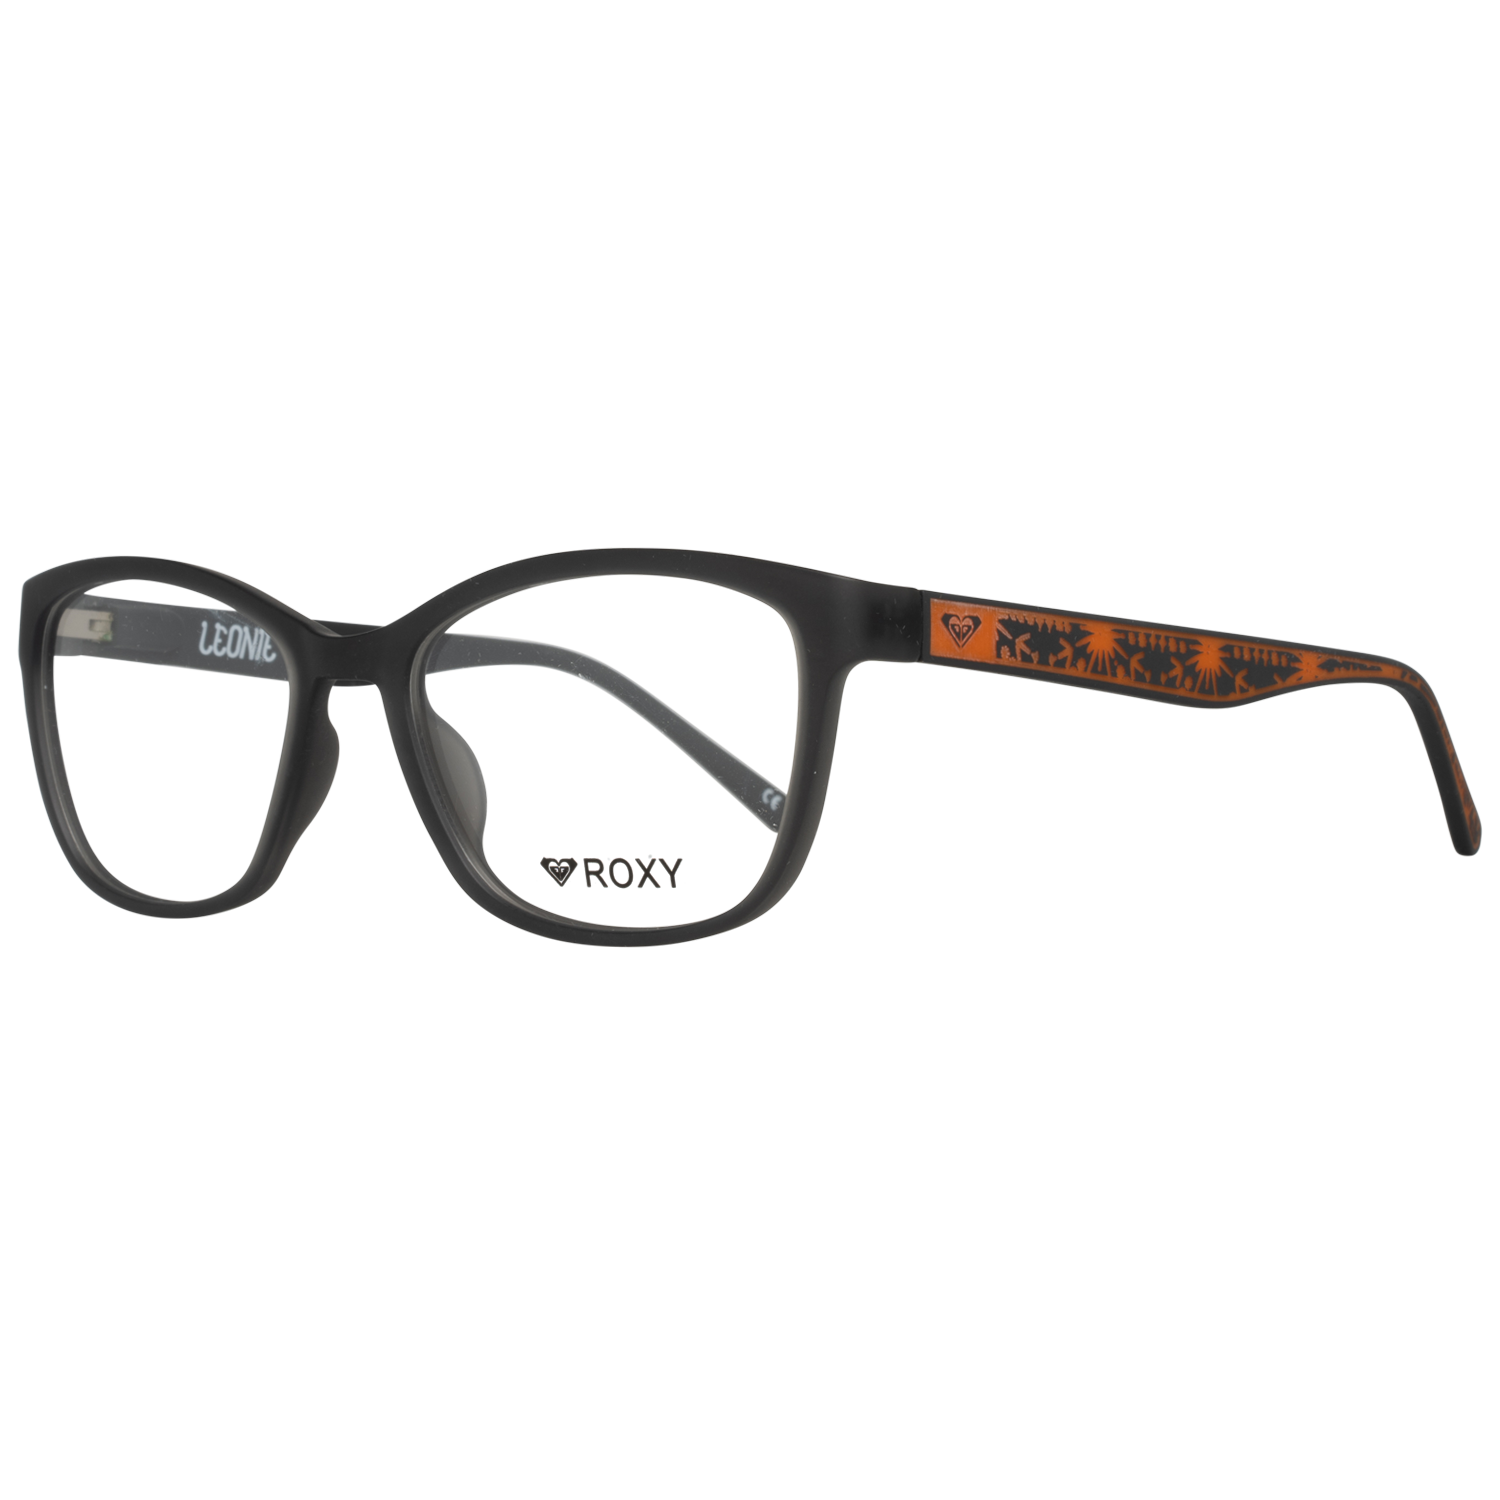 Roxy Frames Roxy Glasses Optical Frame ERJEG03050 AGRY 53 Eyeglasses Eyewear UK USA Australia 